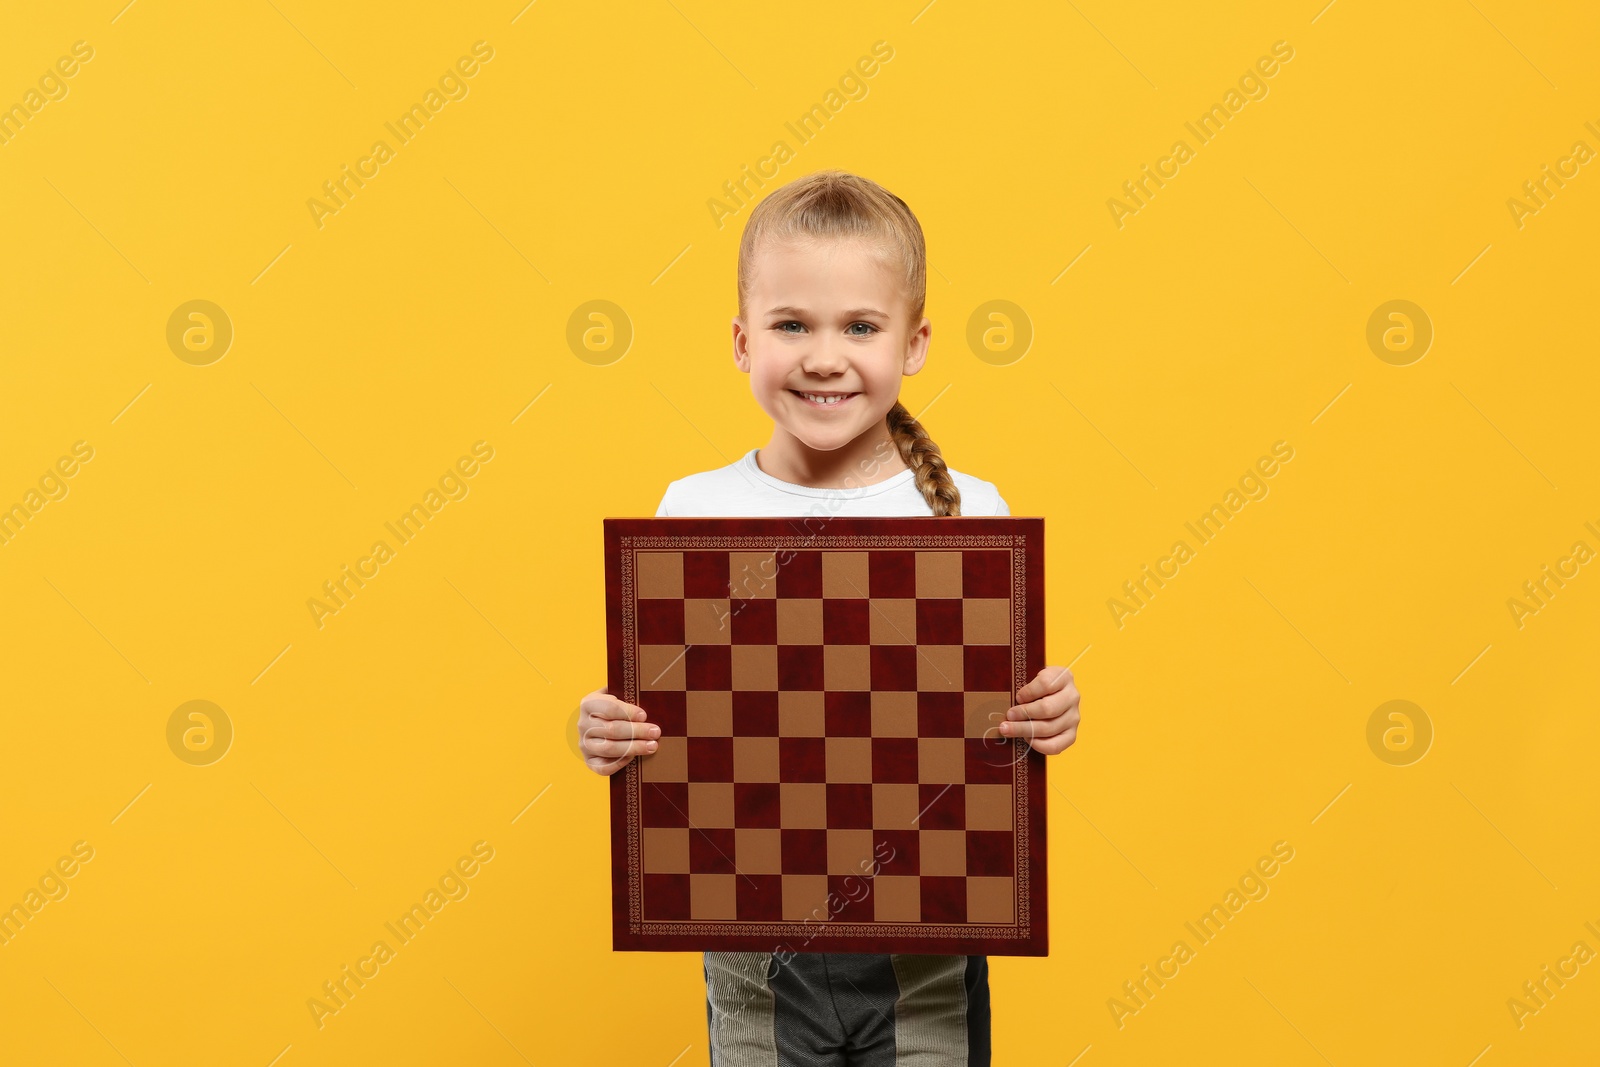 Photo of Cute girl holding chessboard on orange background